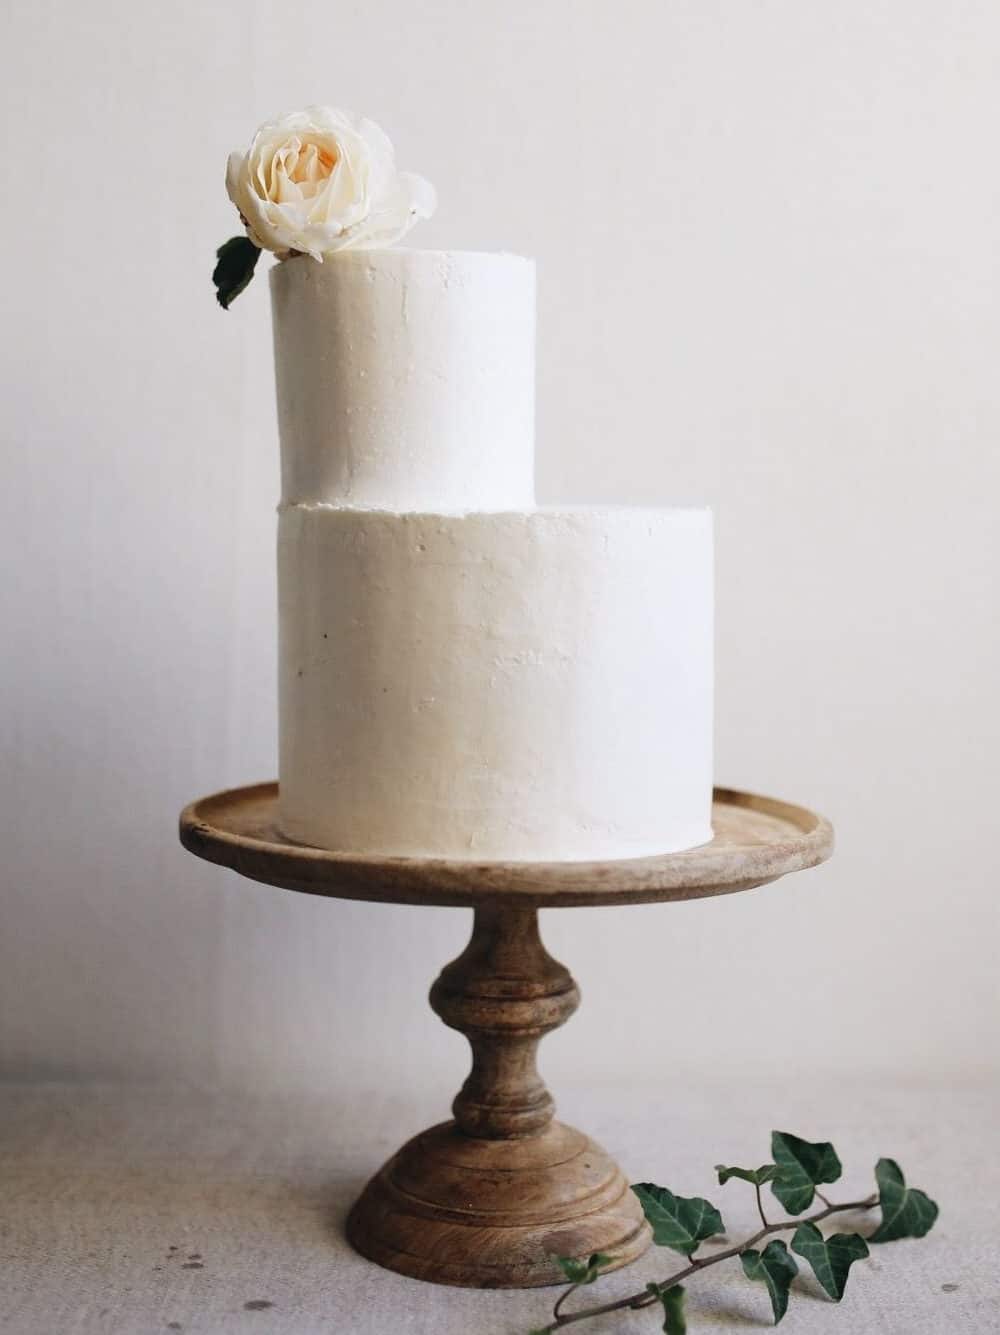 International Wedding Cake Trends for 2019